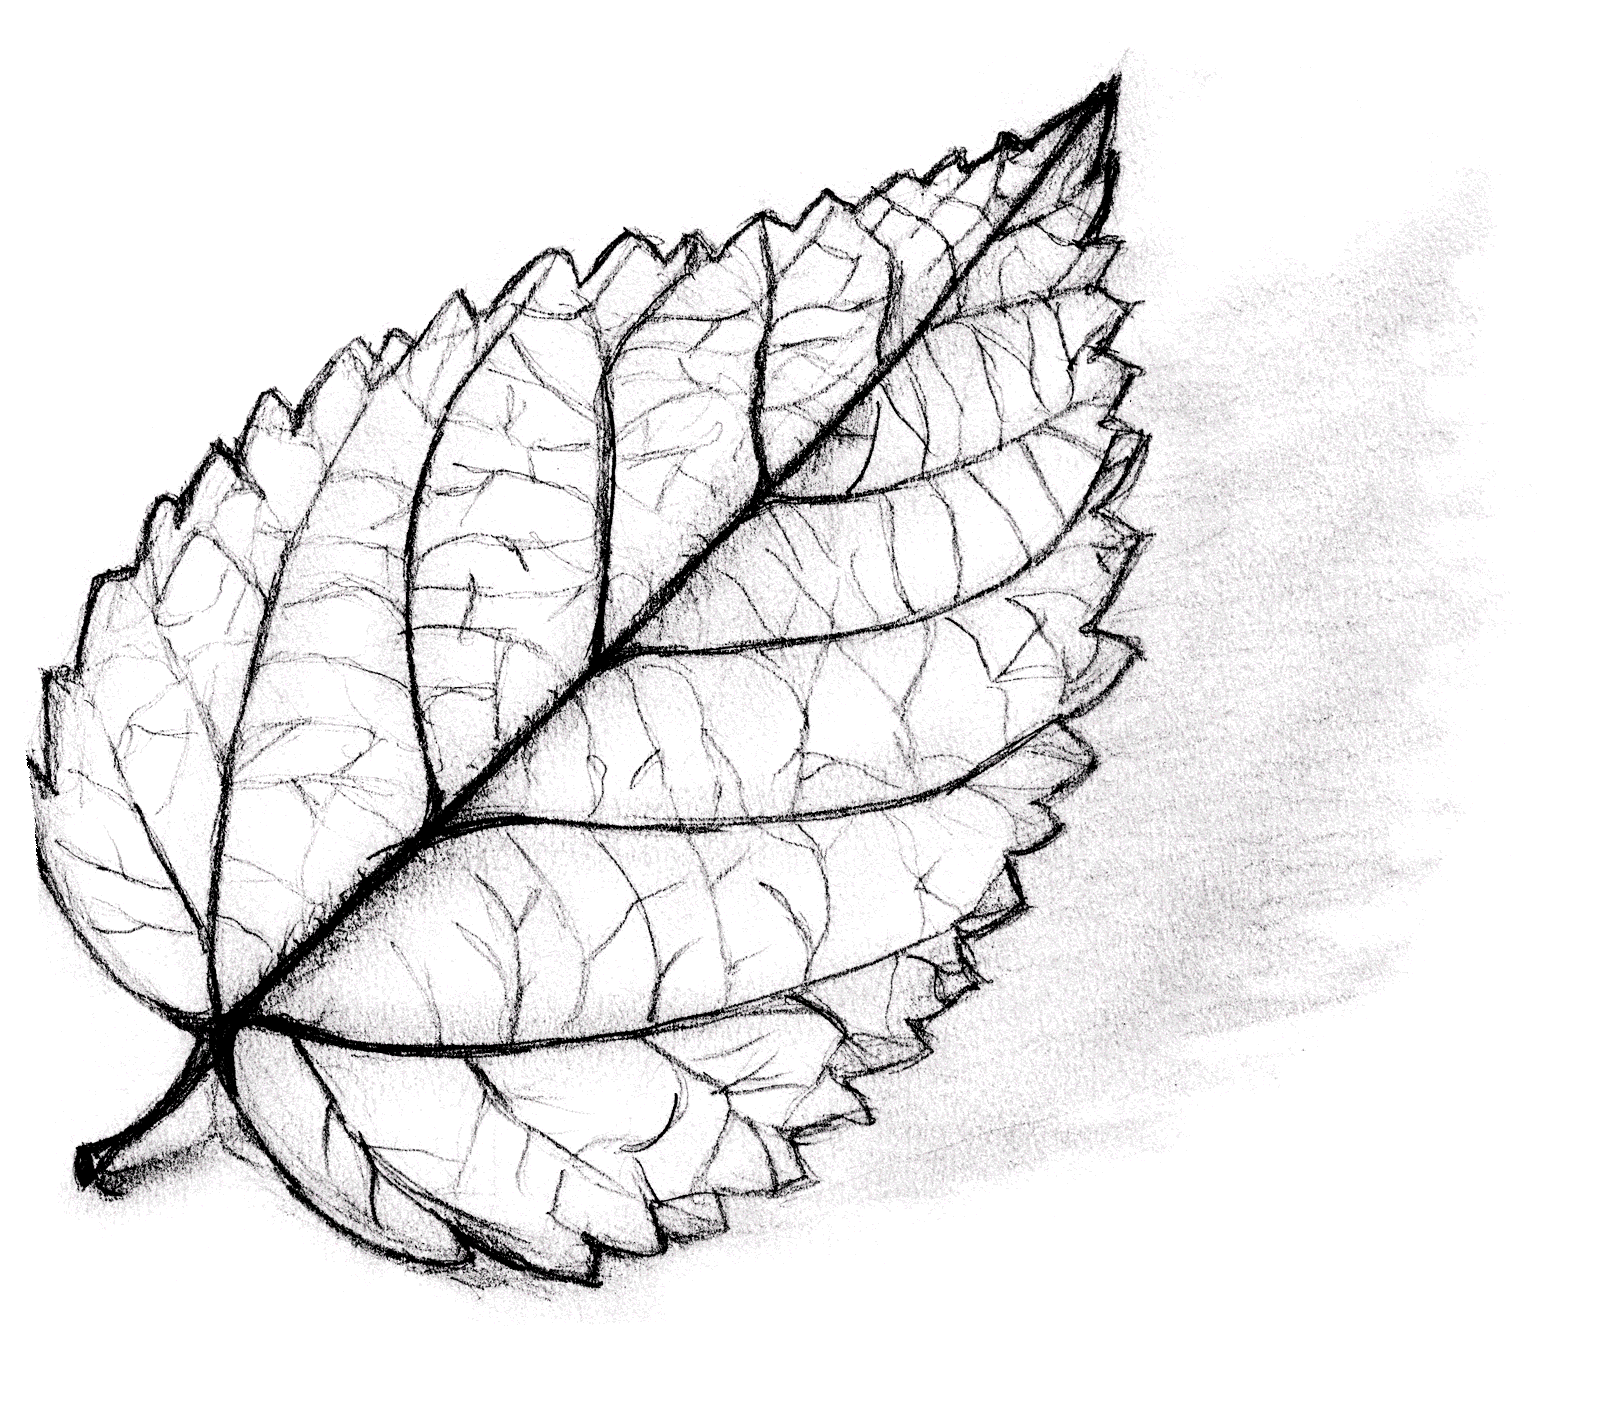 Картинка лист карандашом. Листья карандашом. Рисунки листьев. Листья рисунок карандашом для срисовки. Красивые листья карандашом.